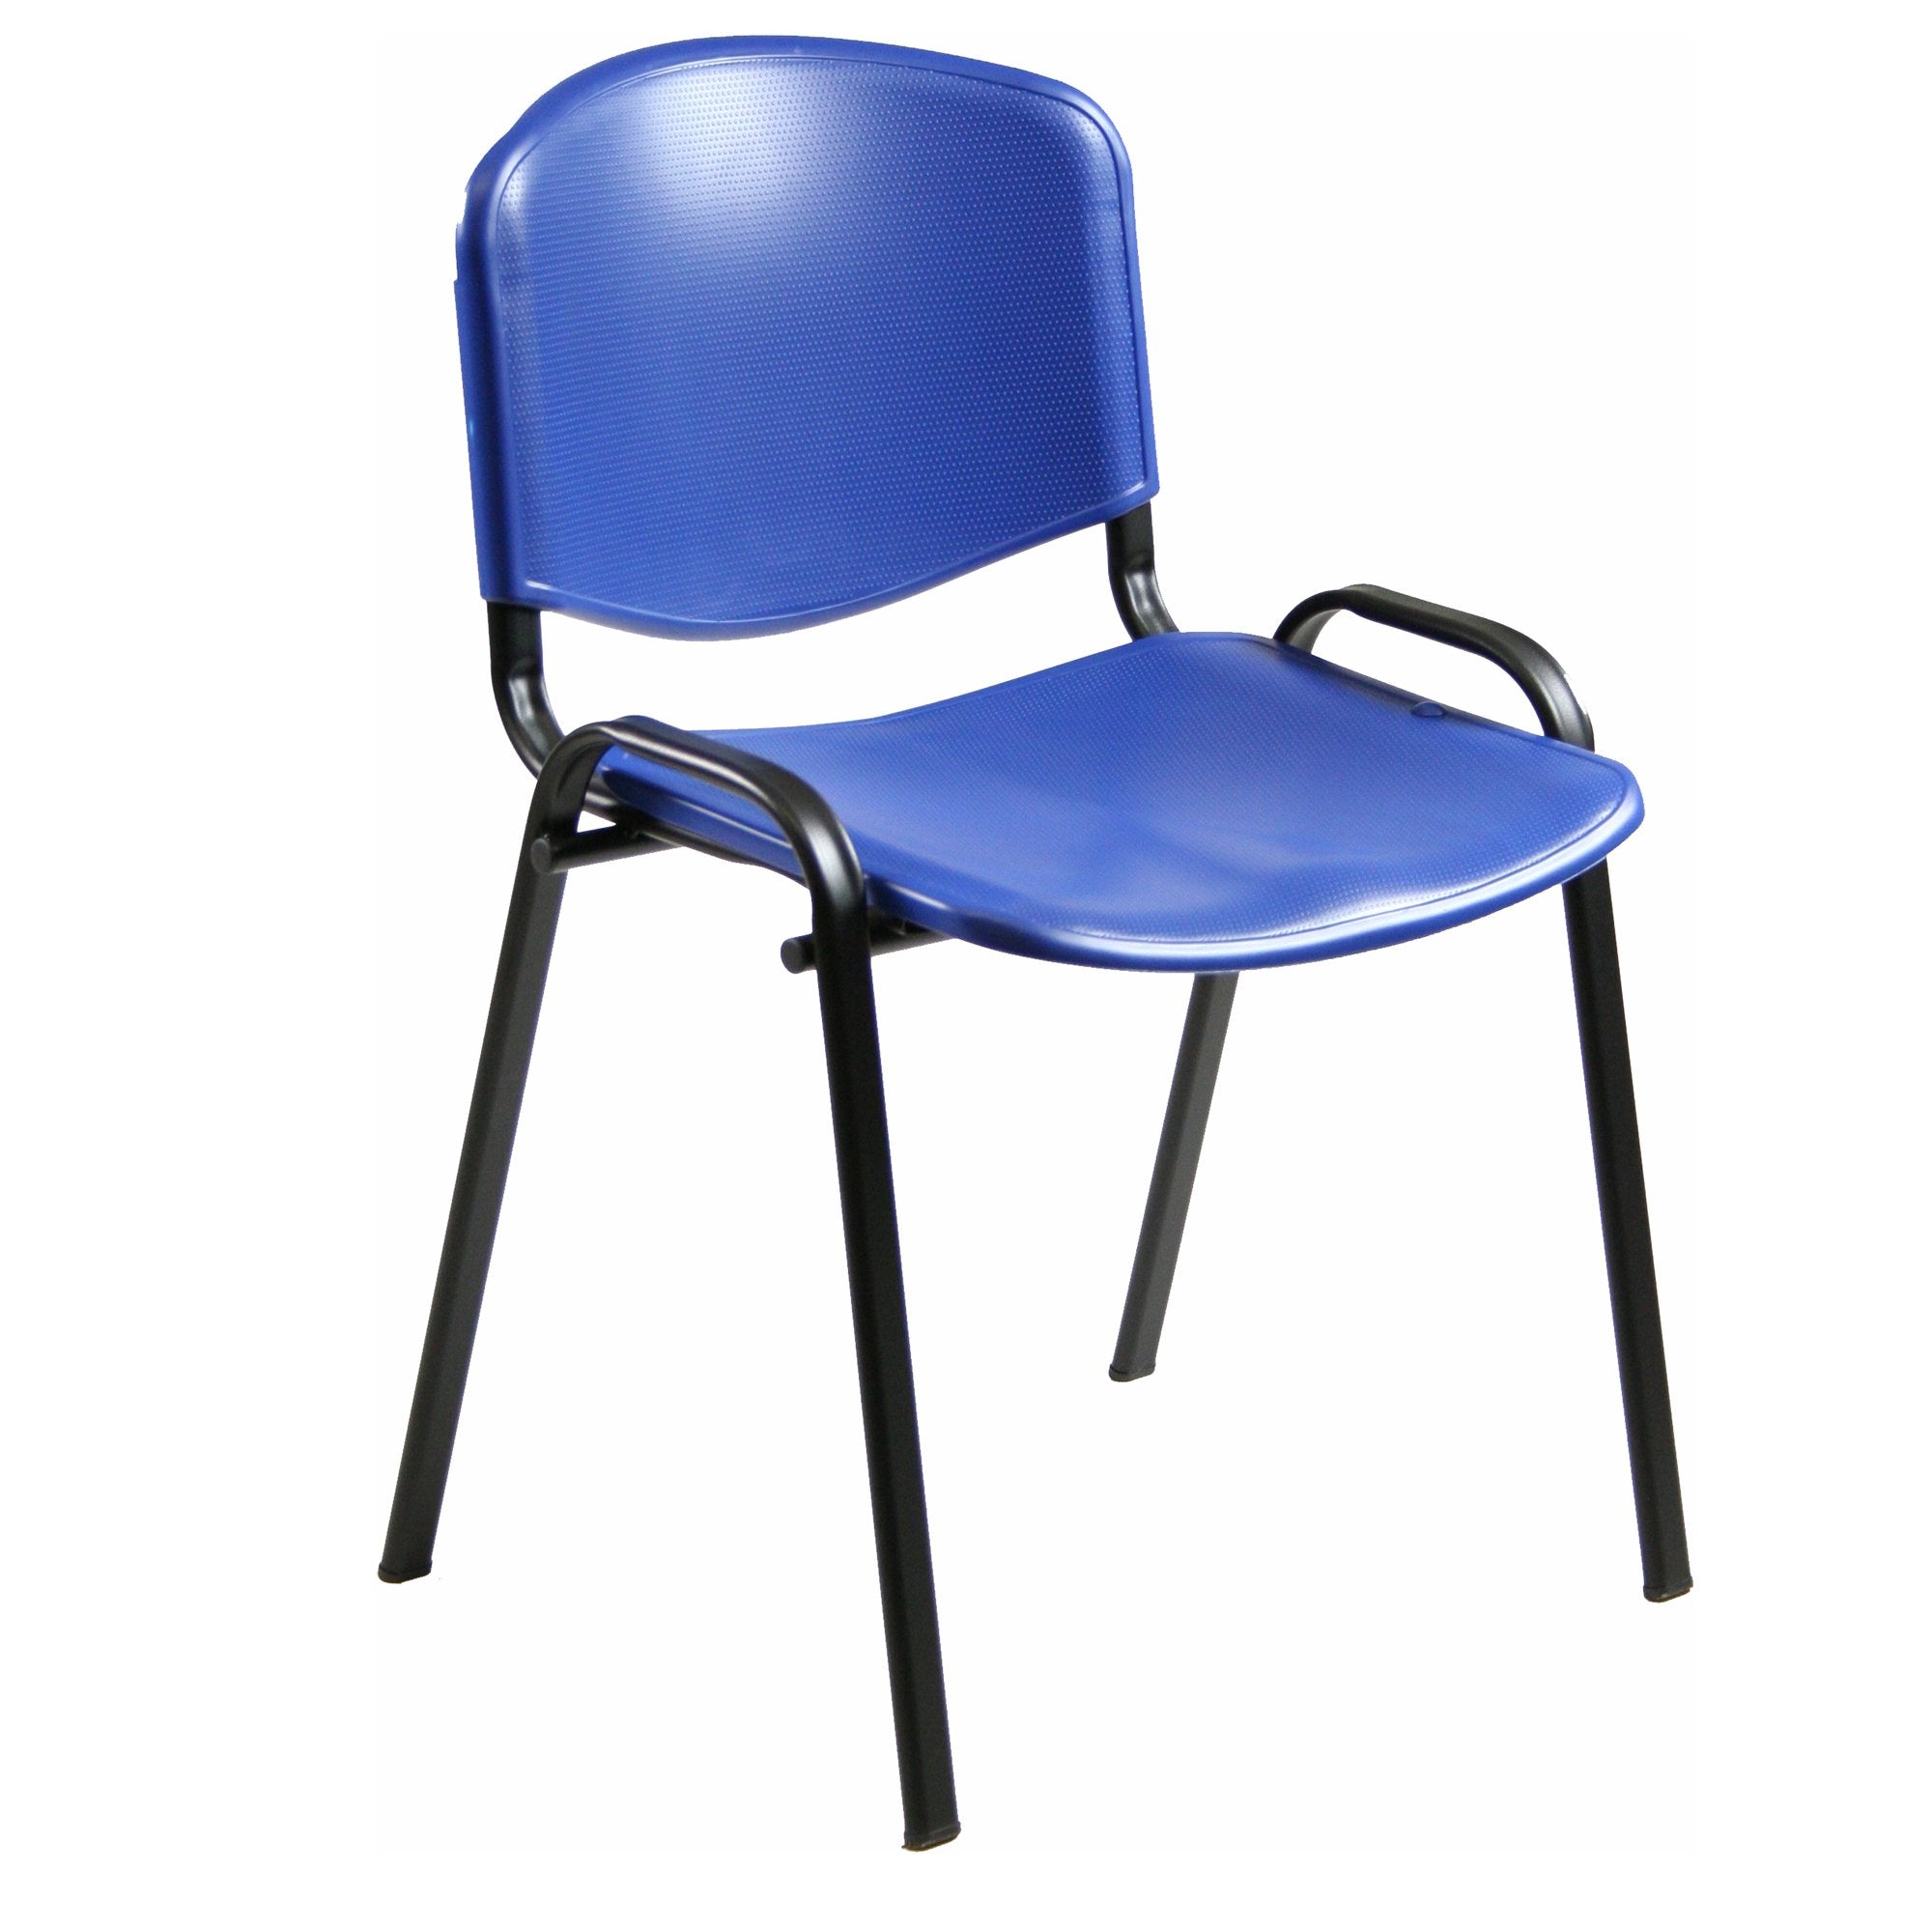 unisit-sedia-attesa-dado-d5sp-blu-senza-braccioli